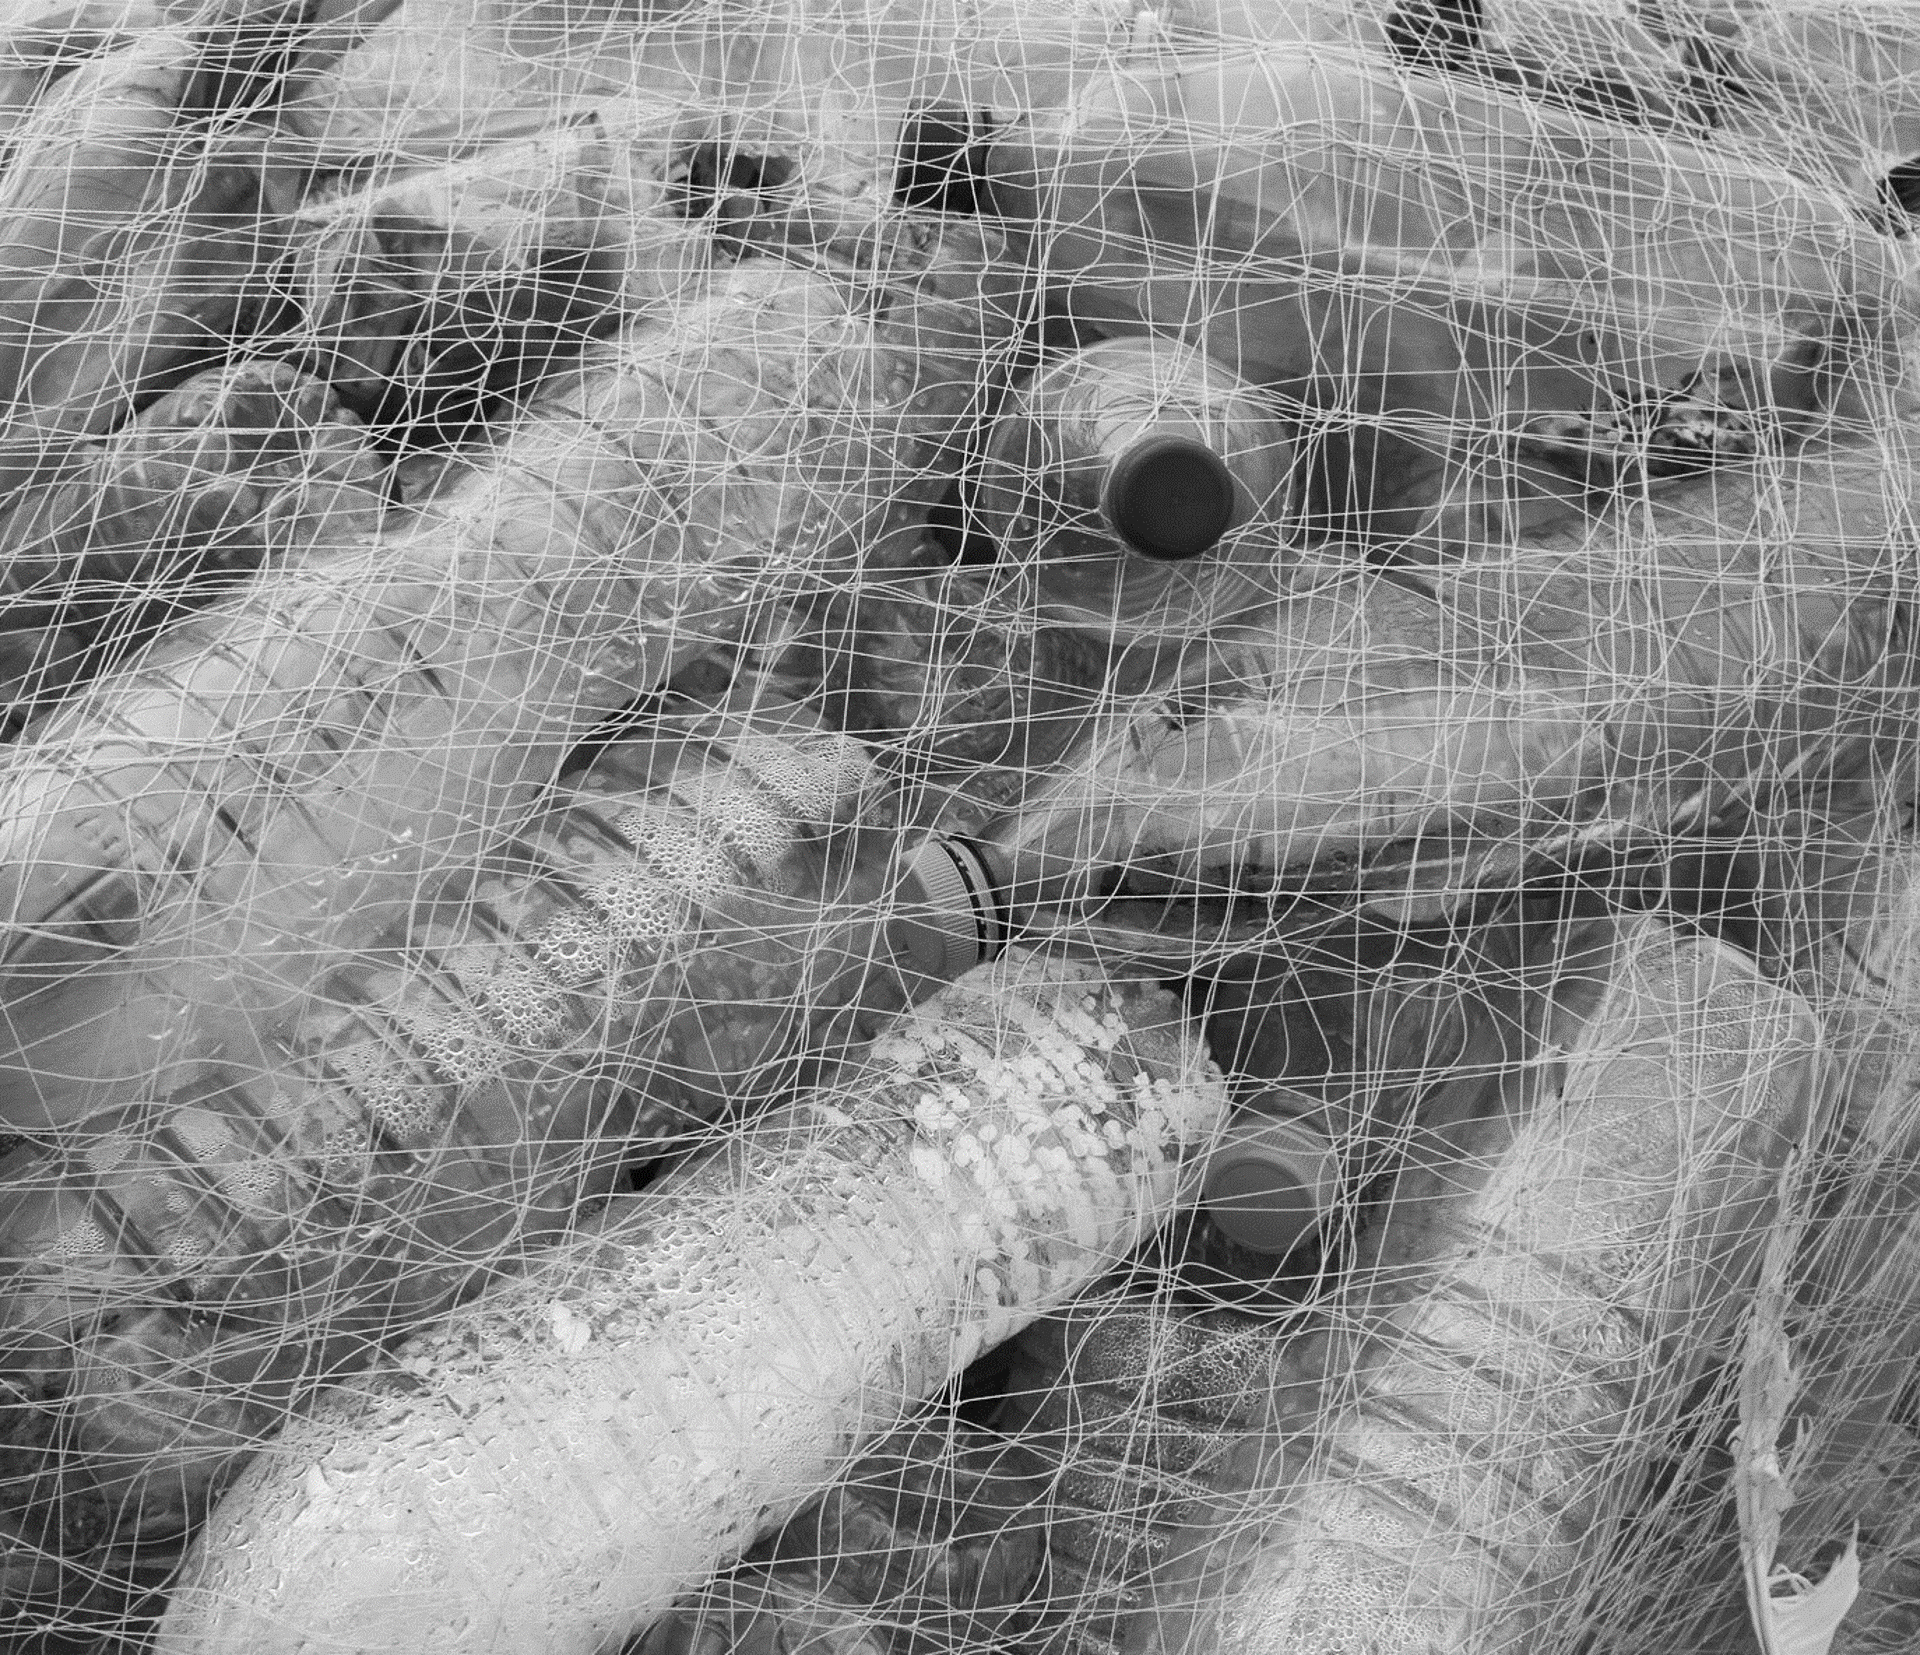 water bottles caught in a net